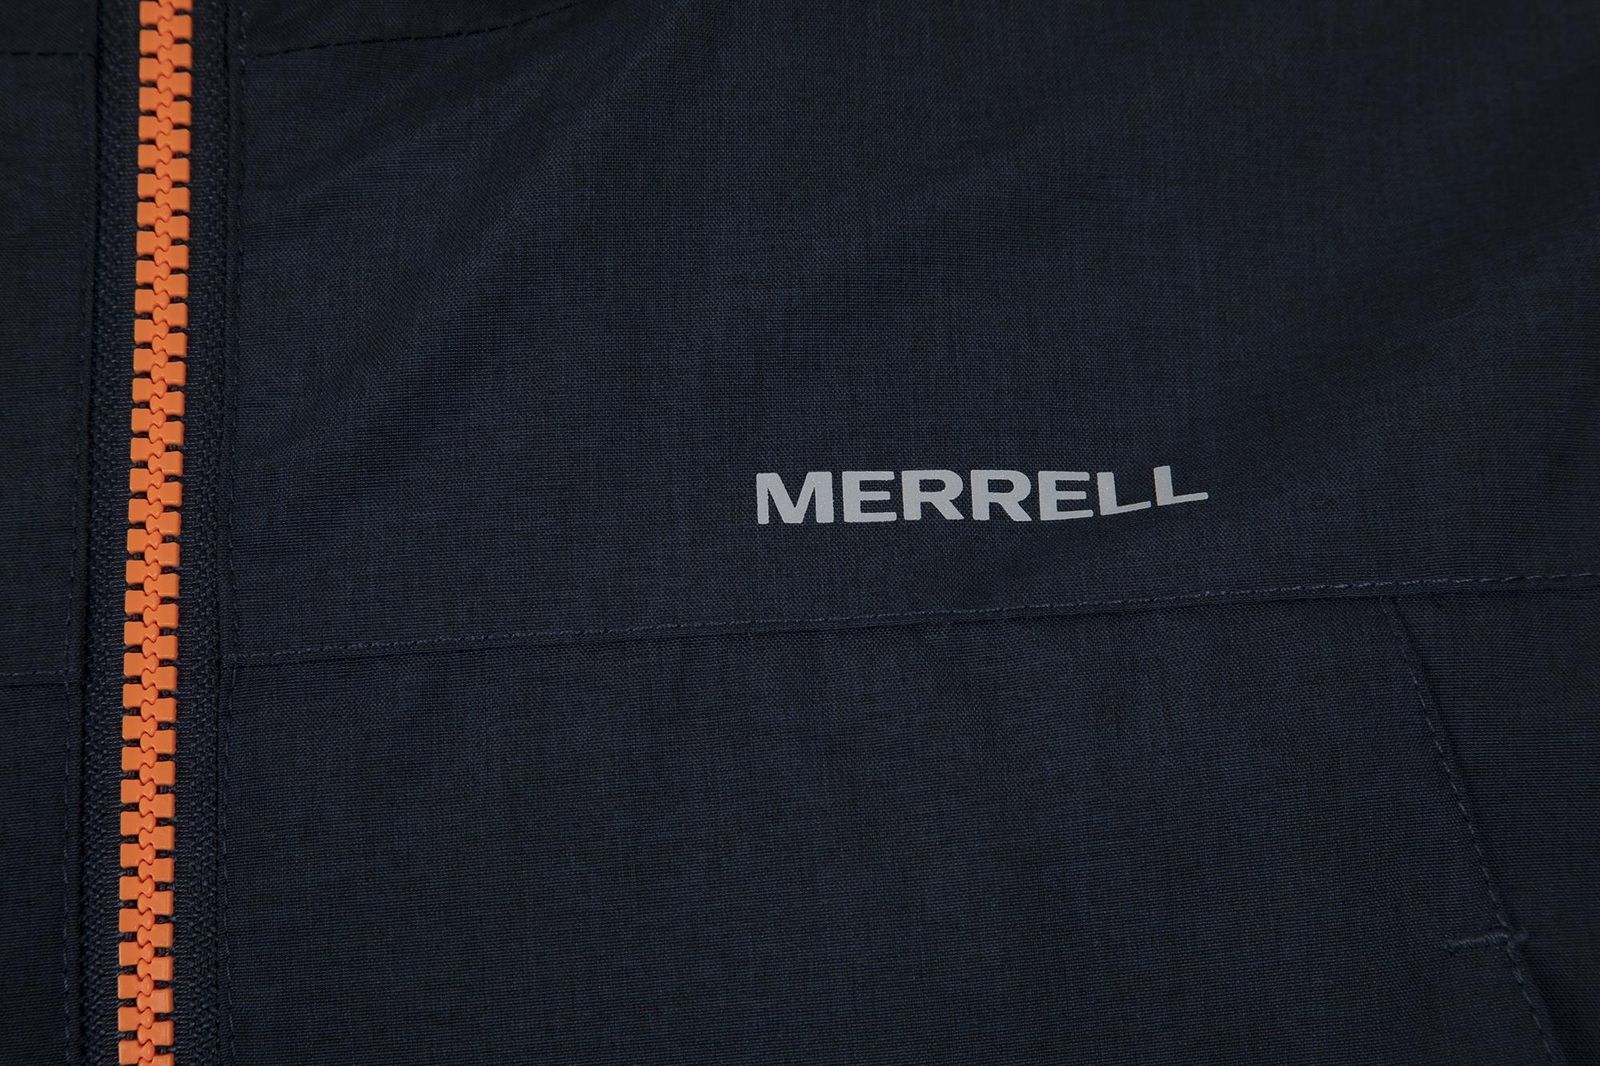   Merrell Men's Windbreaker, : -. S19AMRJAM04-Z4.  50